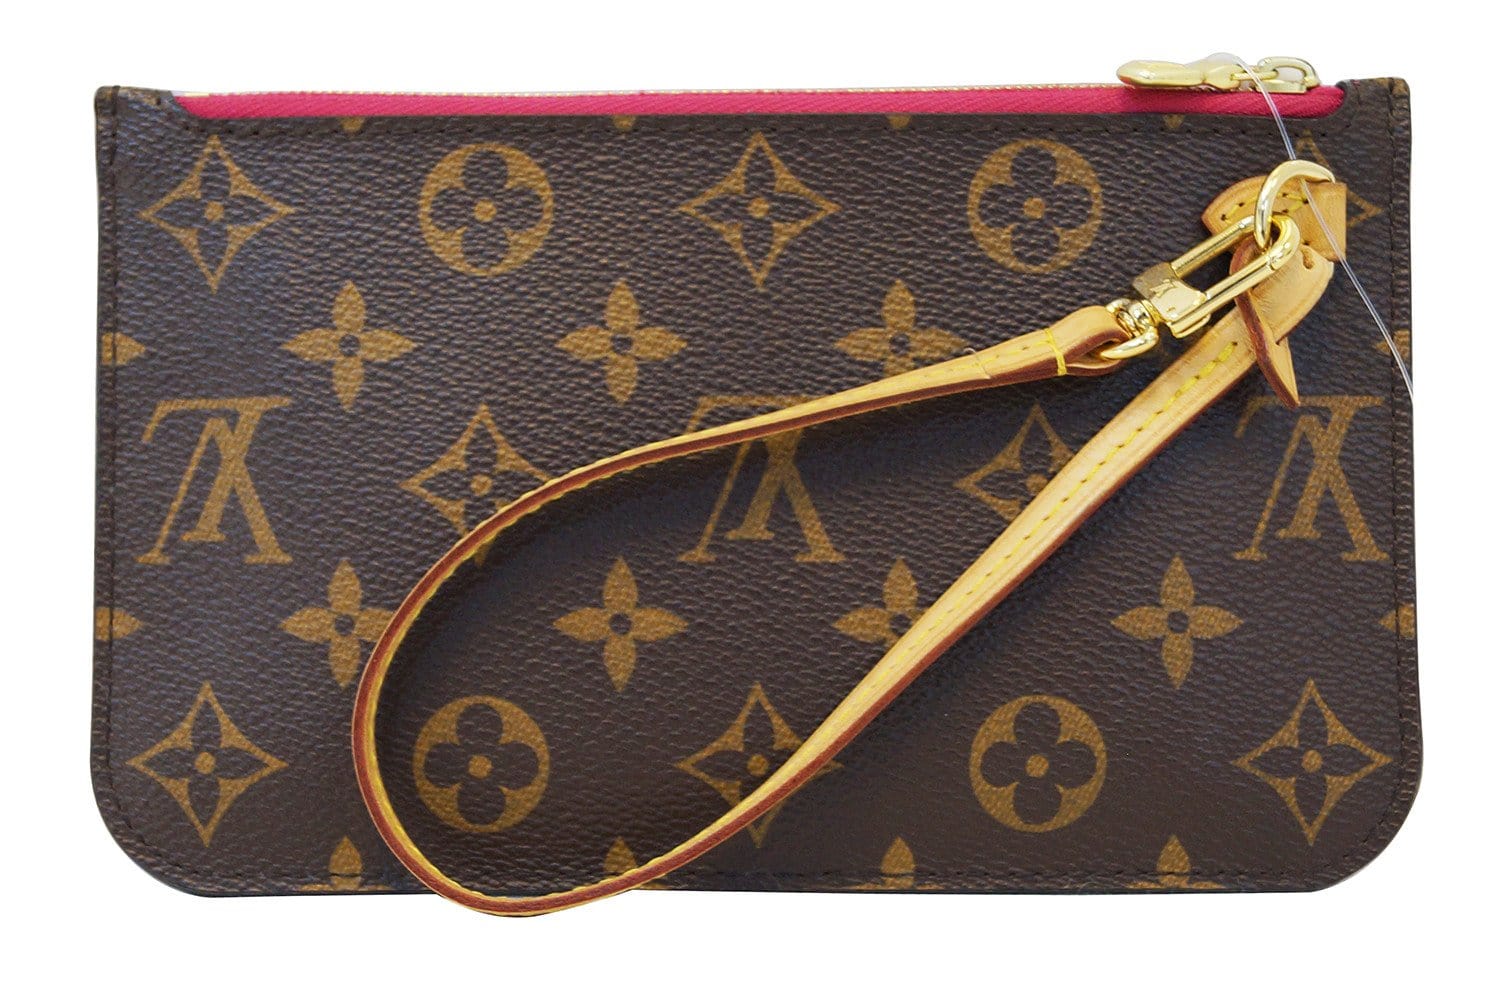 Original Louis Vuitton Handbag Never Full -Comes. With Tote/Clutch